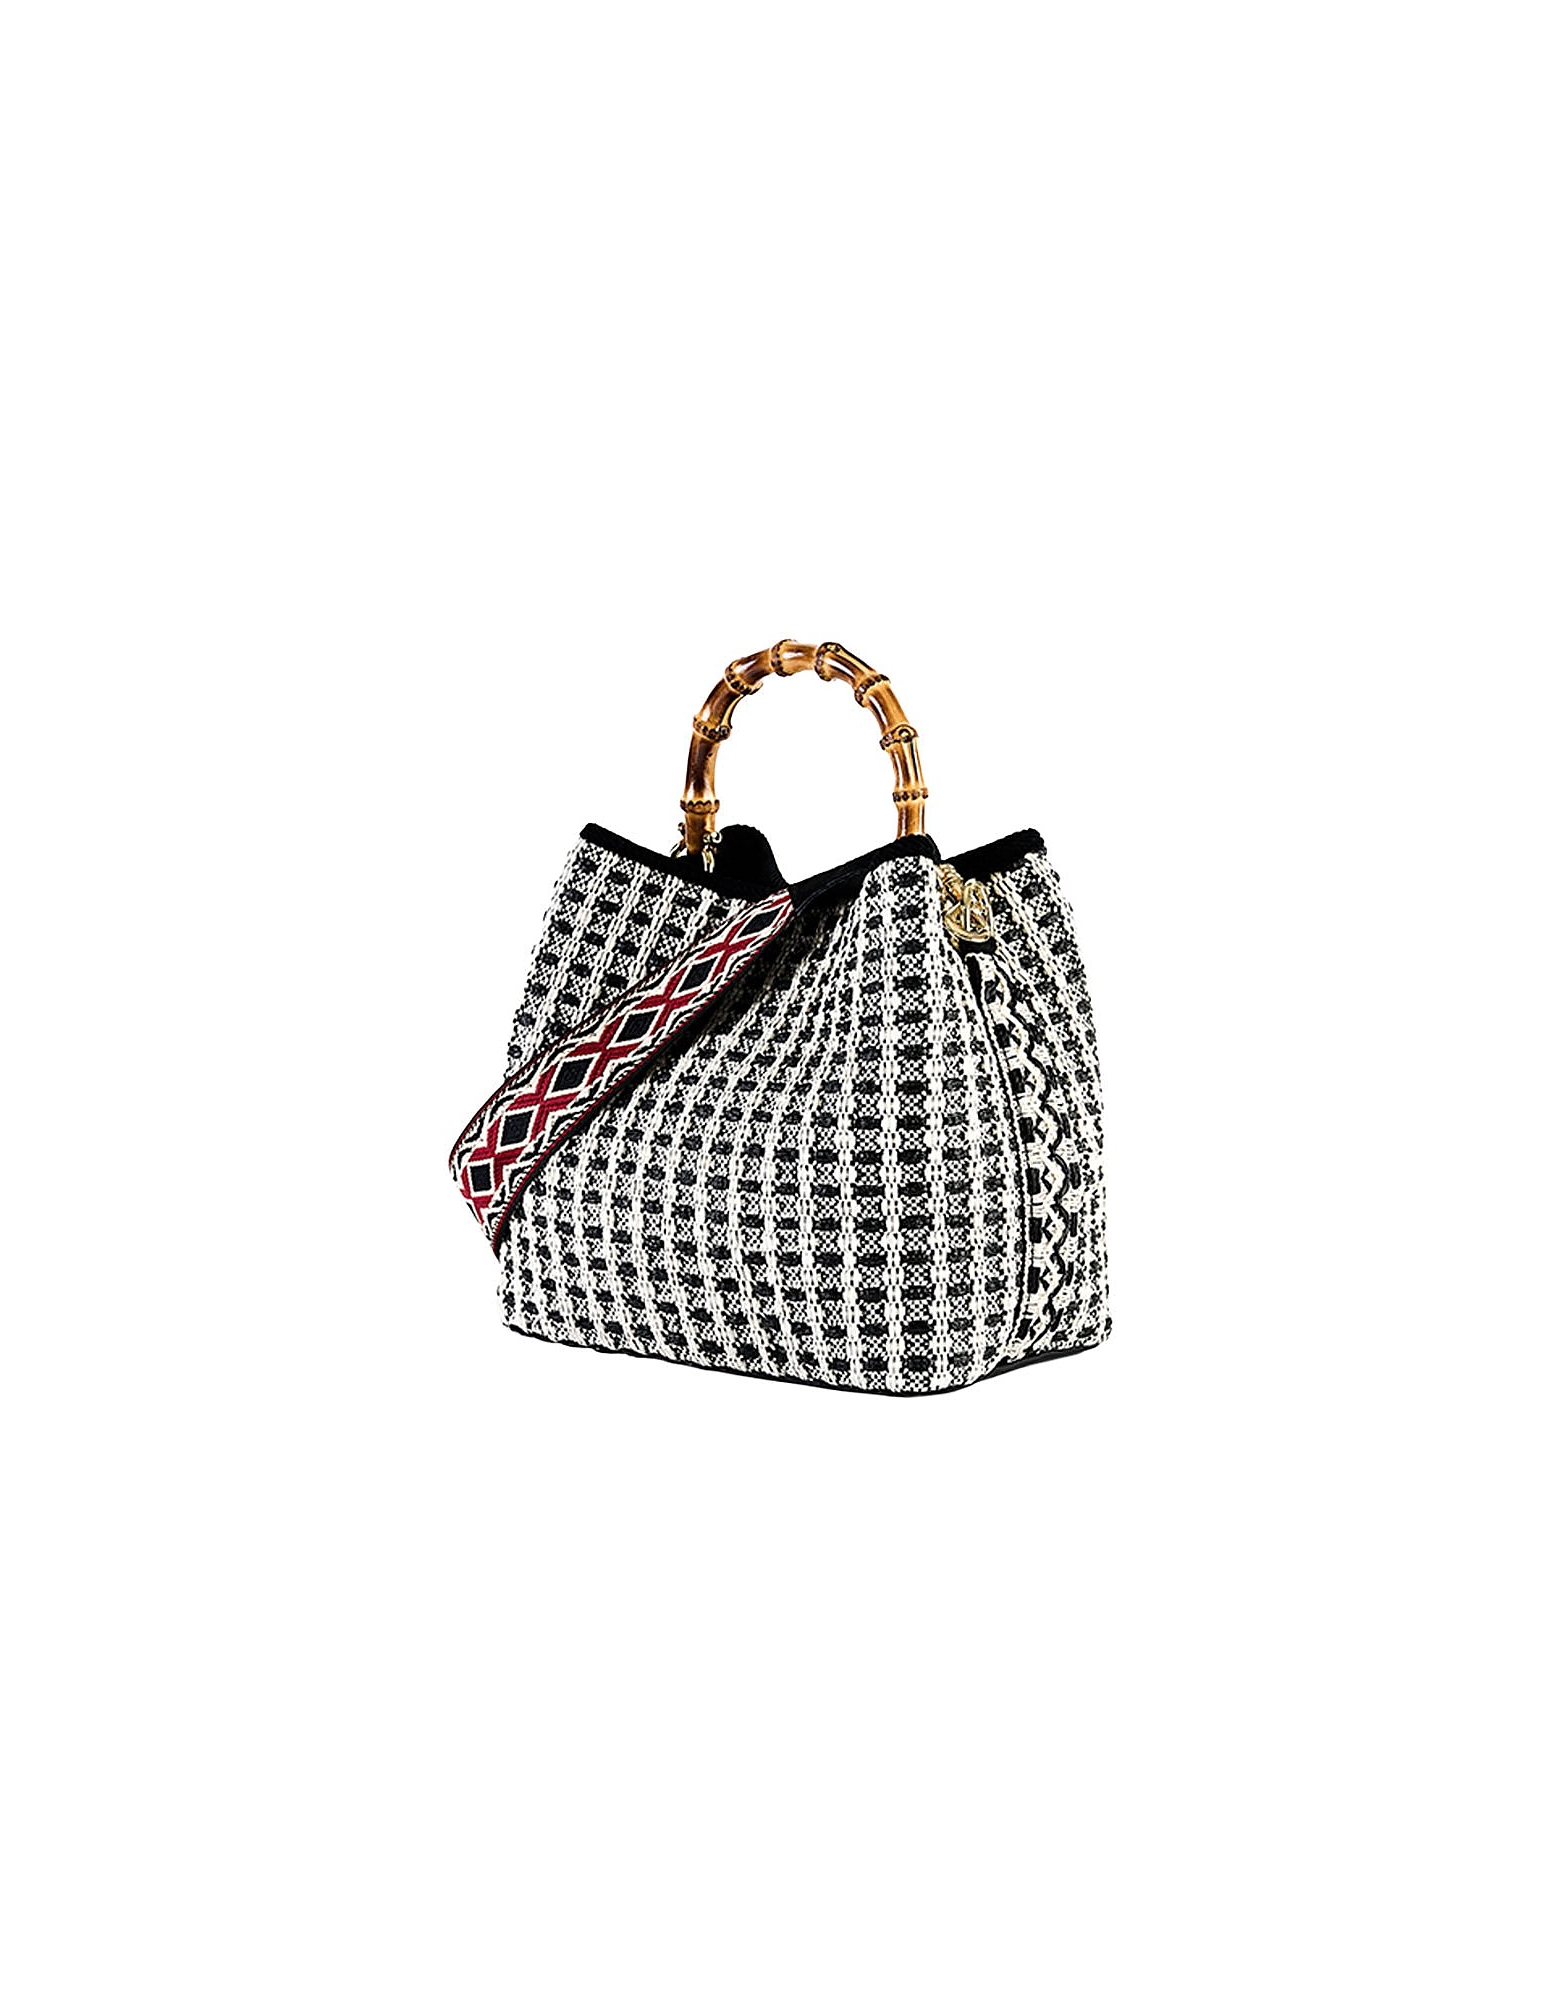 Viamailbag Designer Handbags Coral Cross - Black And White Top Handle Bag In Noir